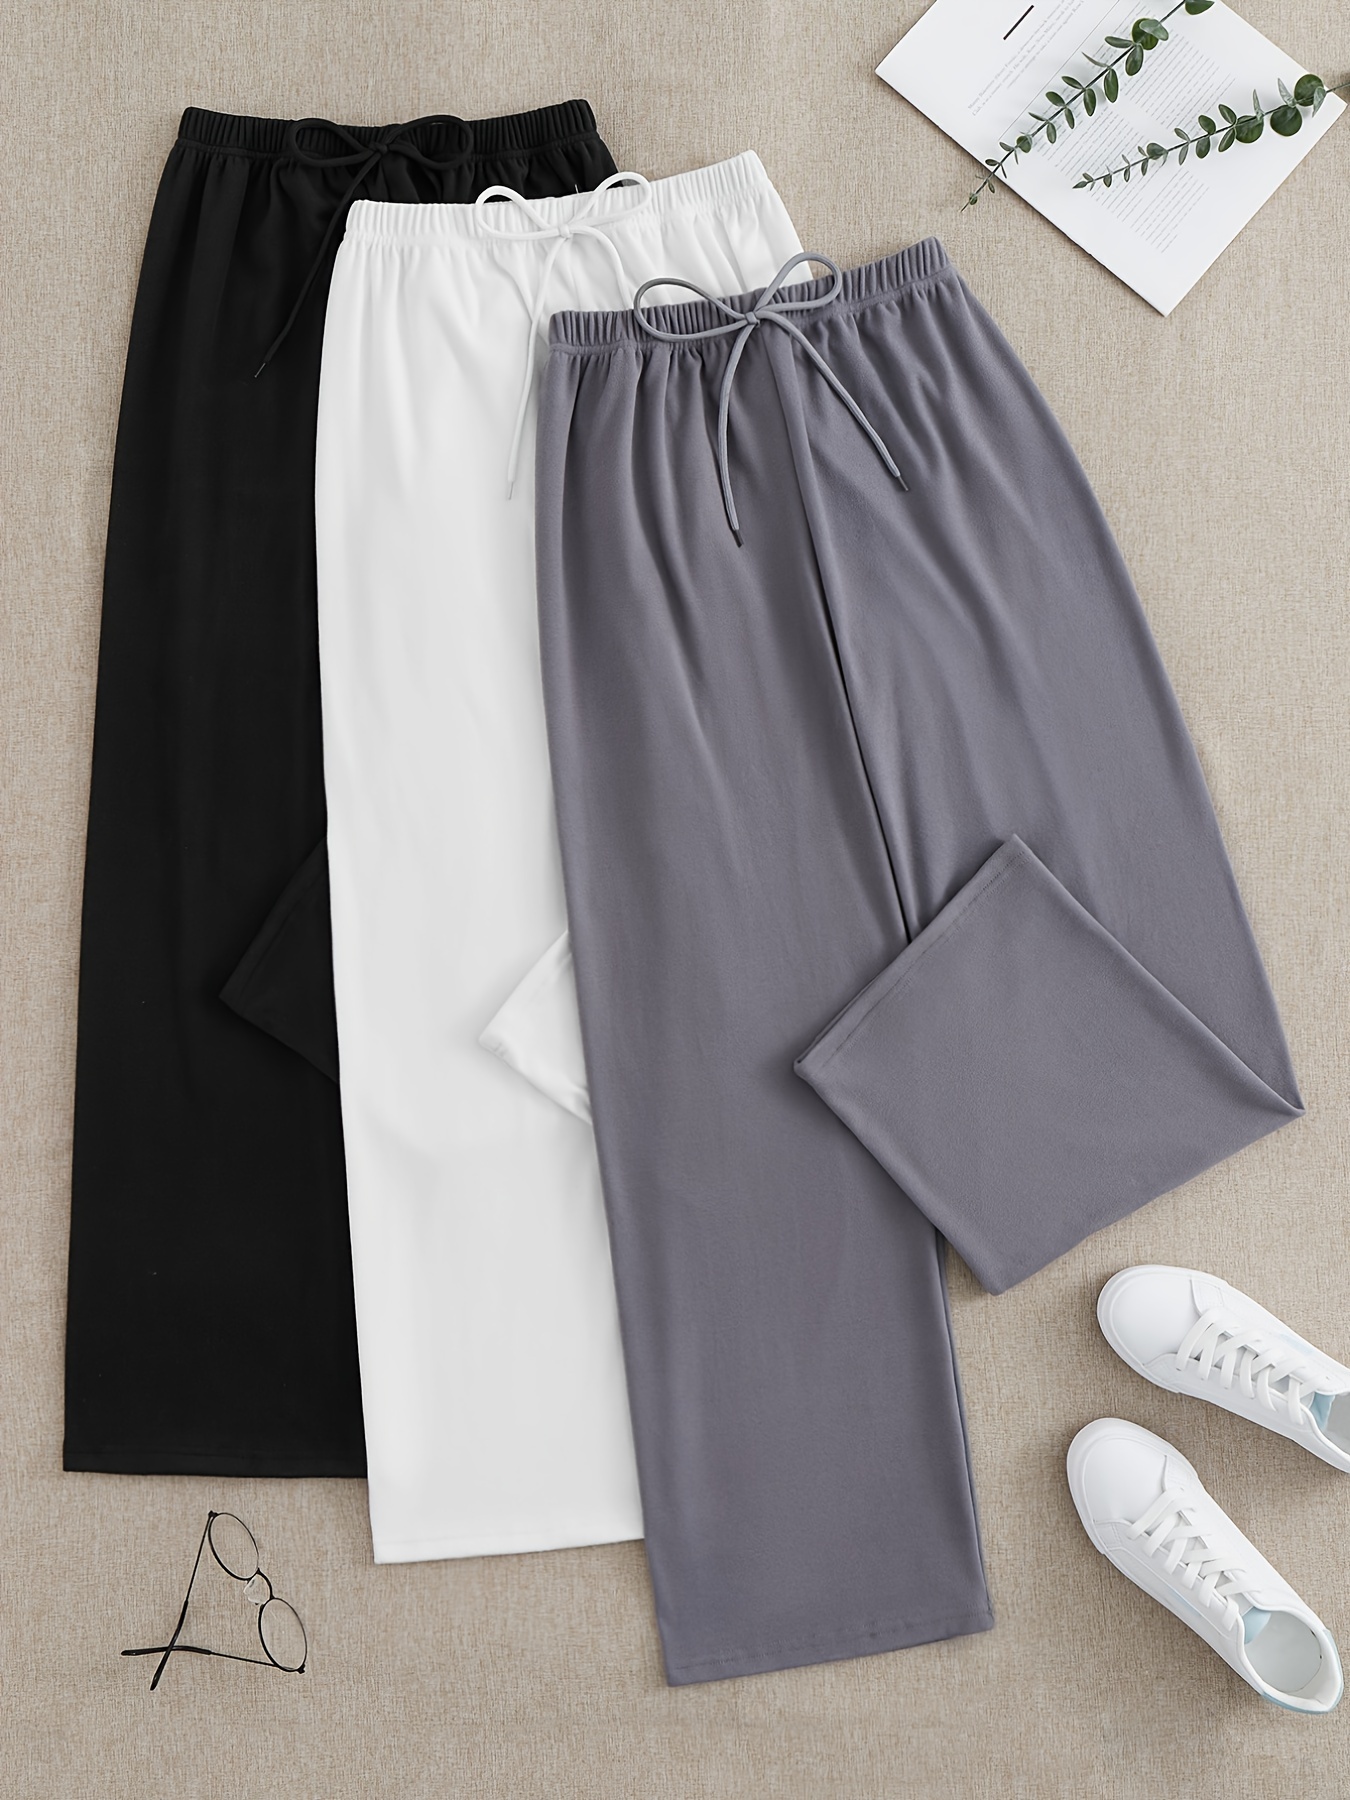 Gothic Contrast Lace Capri Pants, Elegant High Waist Solid Slim Pants,  Women's Clothing